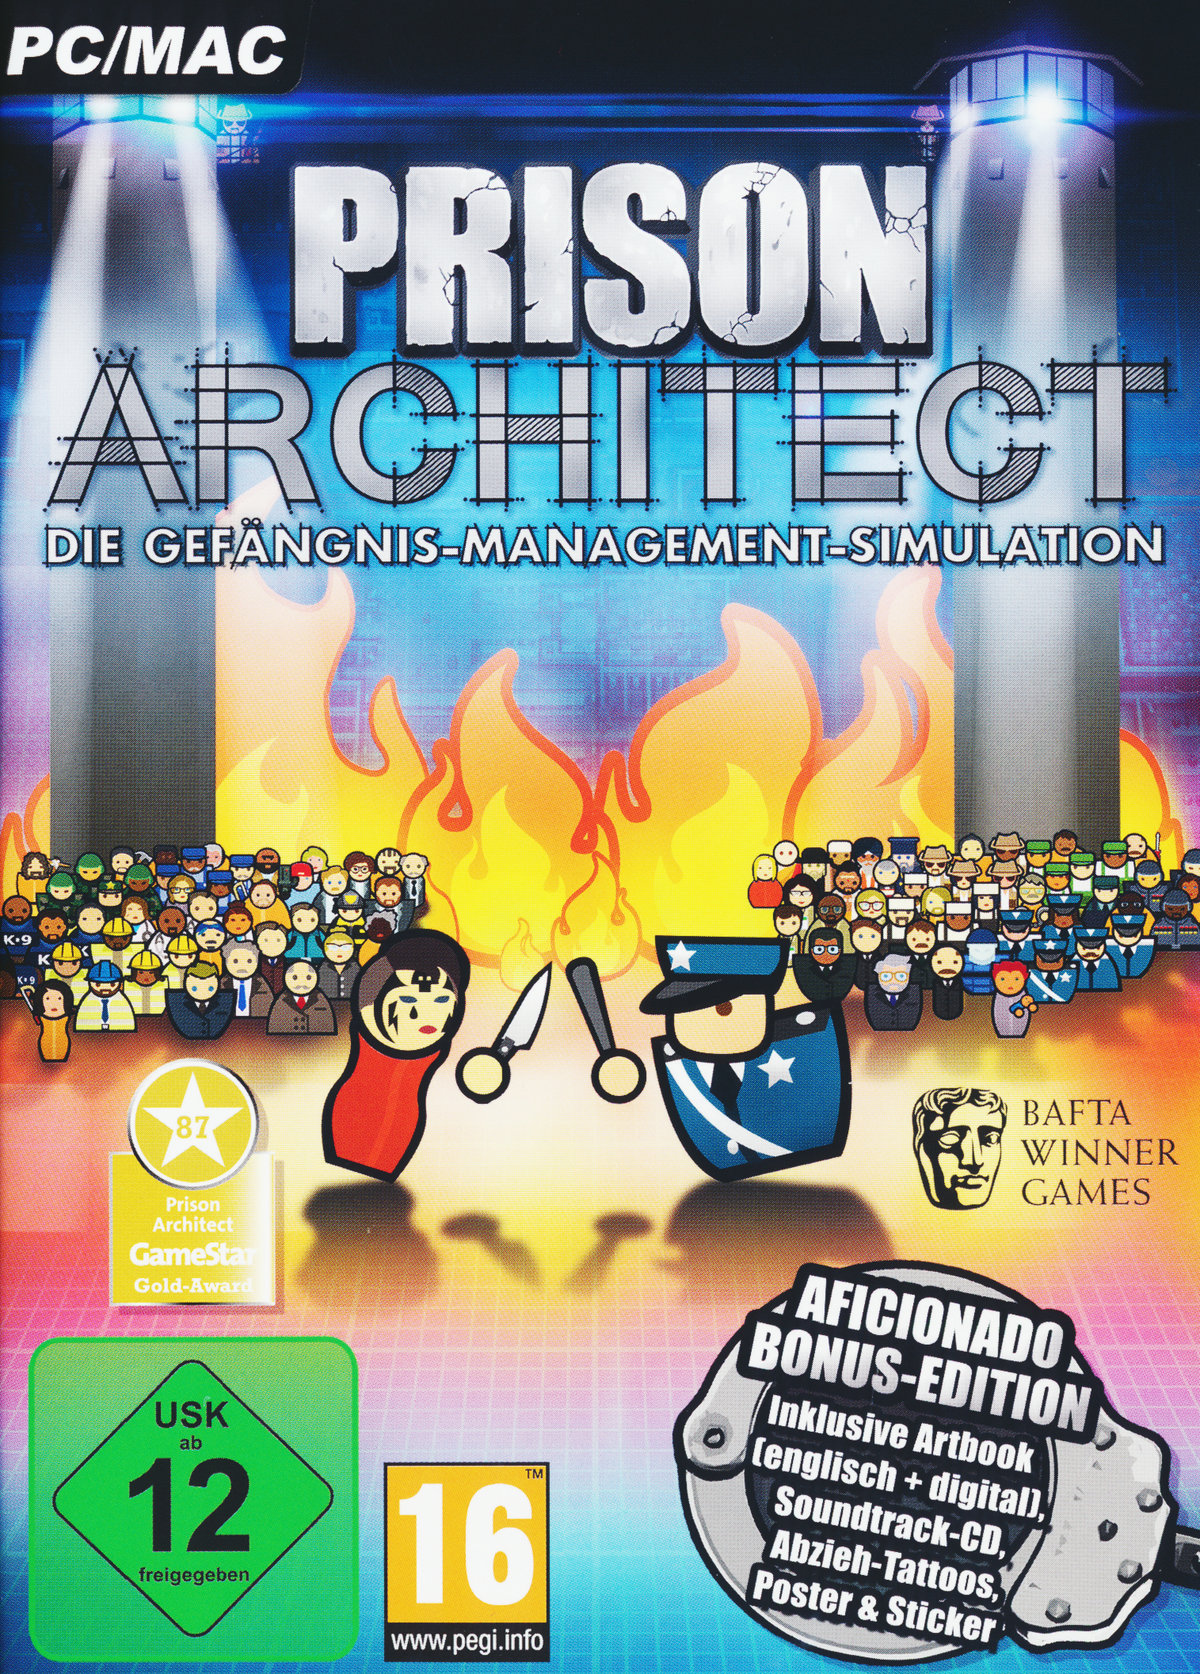 Prison Architect - Aficionado Bonus-Edition von astragon Entertainment